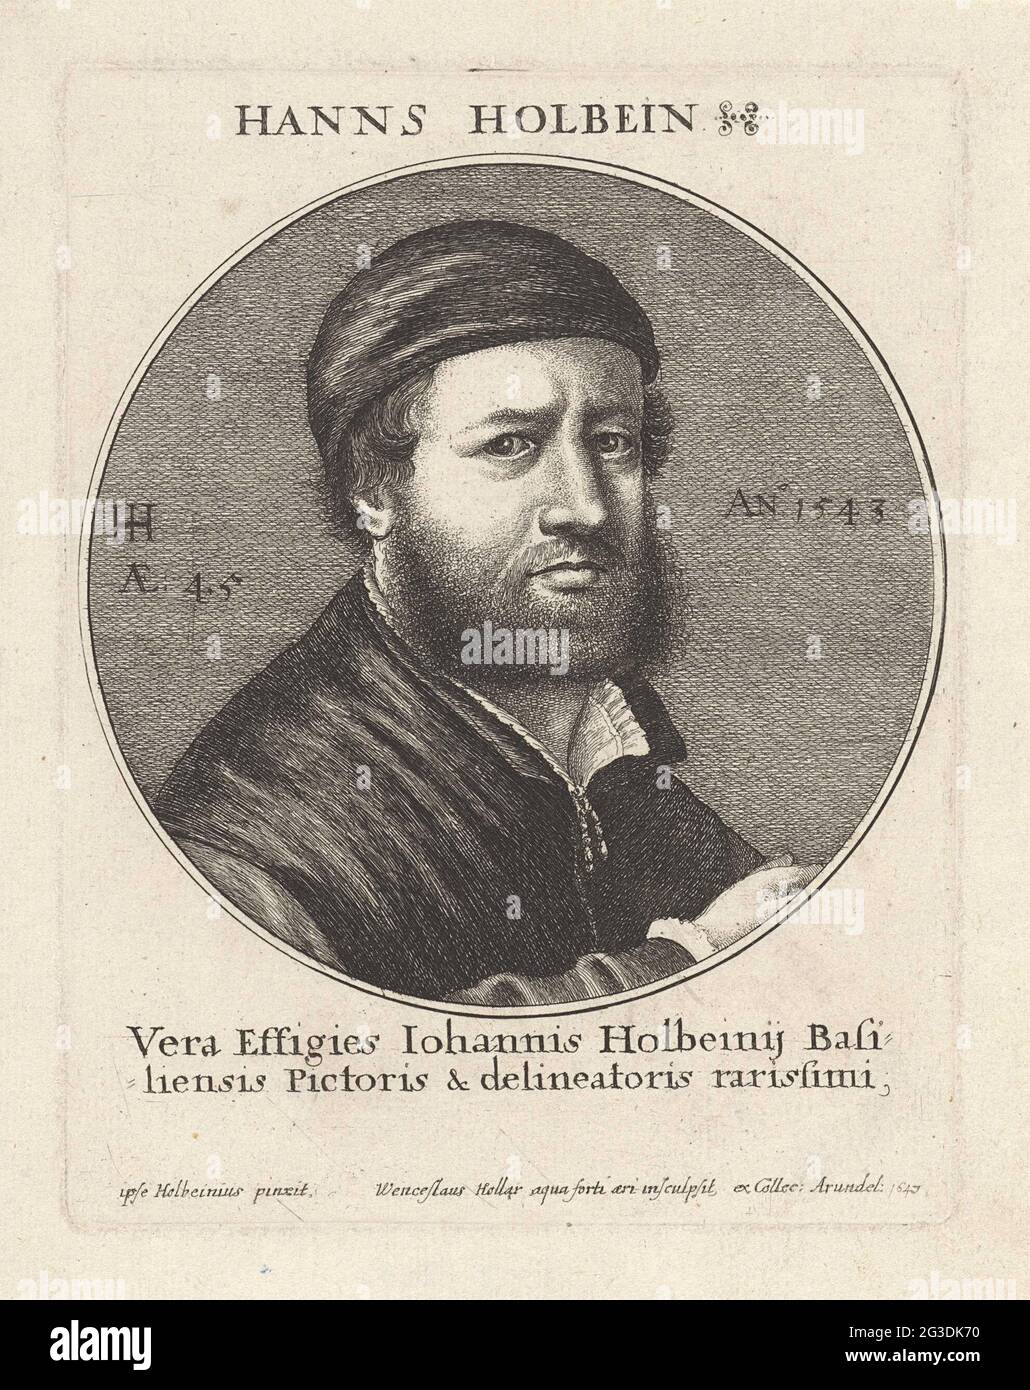 Portrait of Hans Holbein de Jonge. Portrait of the artist Hans Holbein de Jonge. Stock Photo